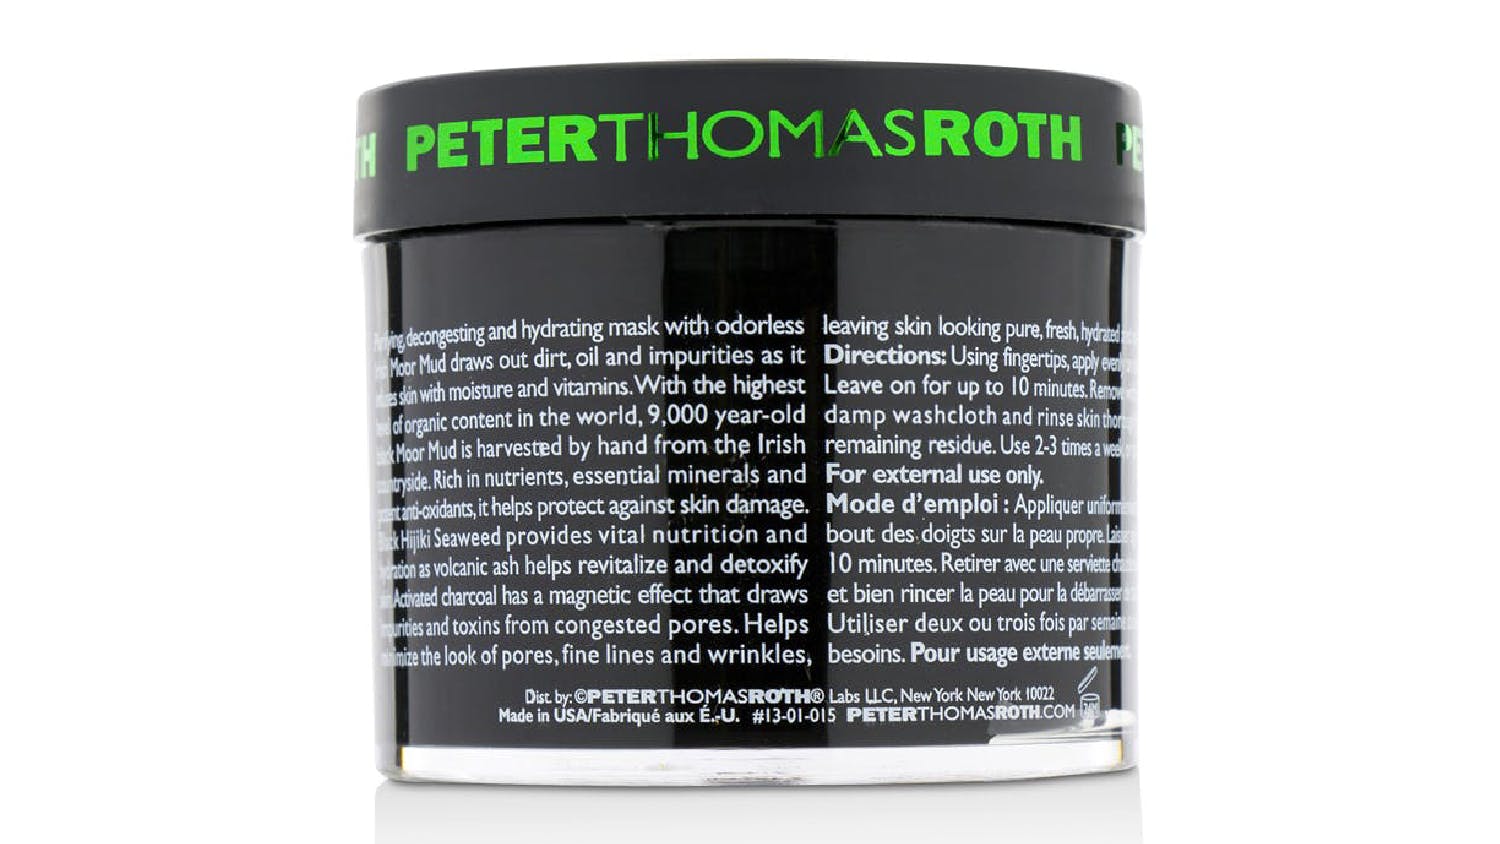 Peter Thomas Roth Irish Moor Mud Purifying Black Mask - 150ml/5oz